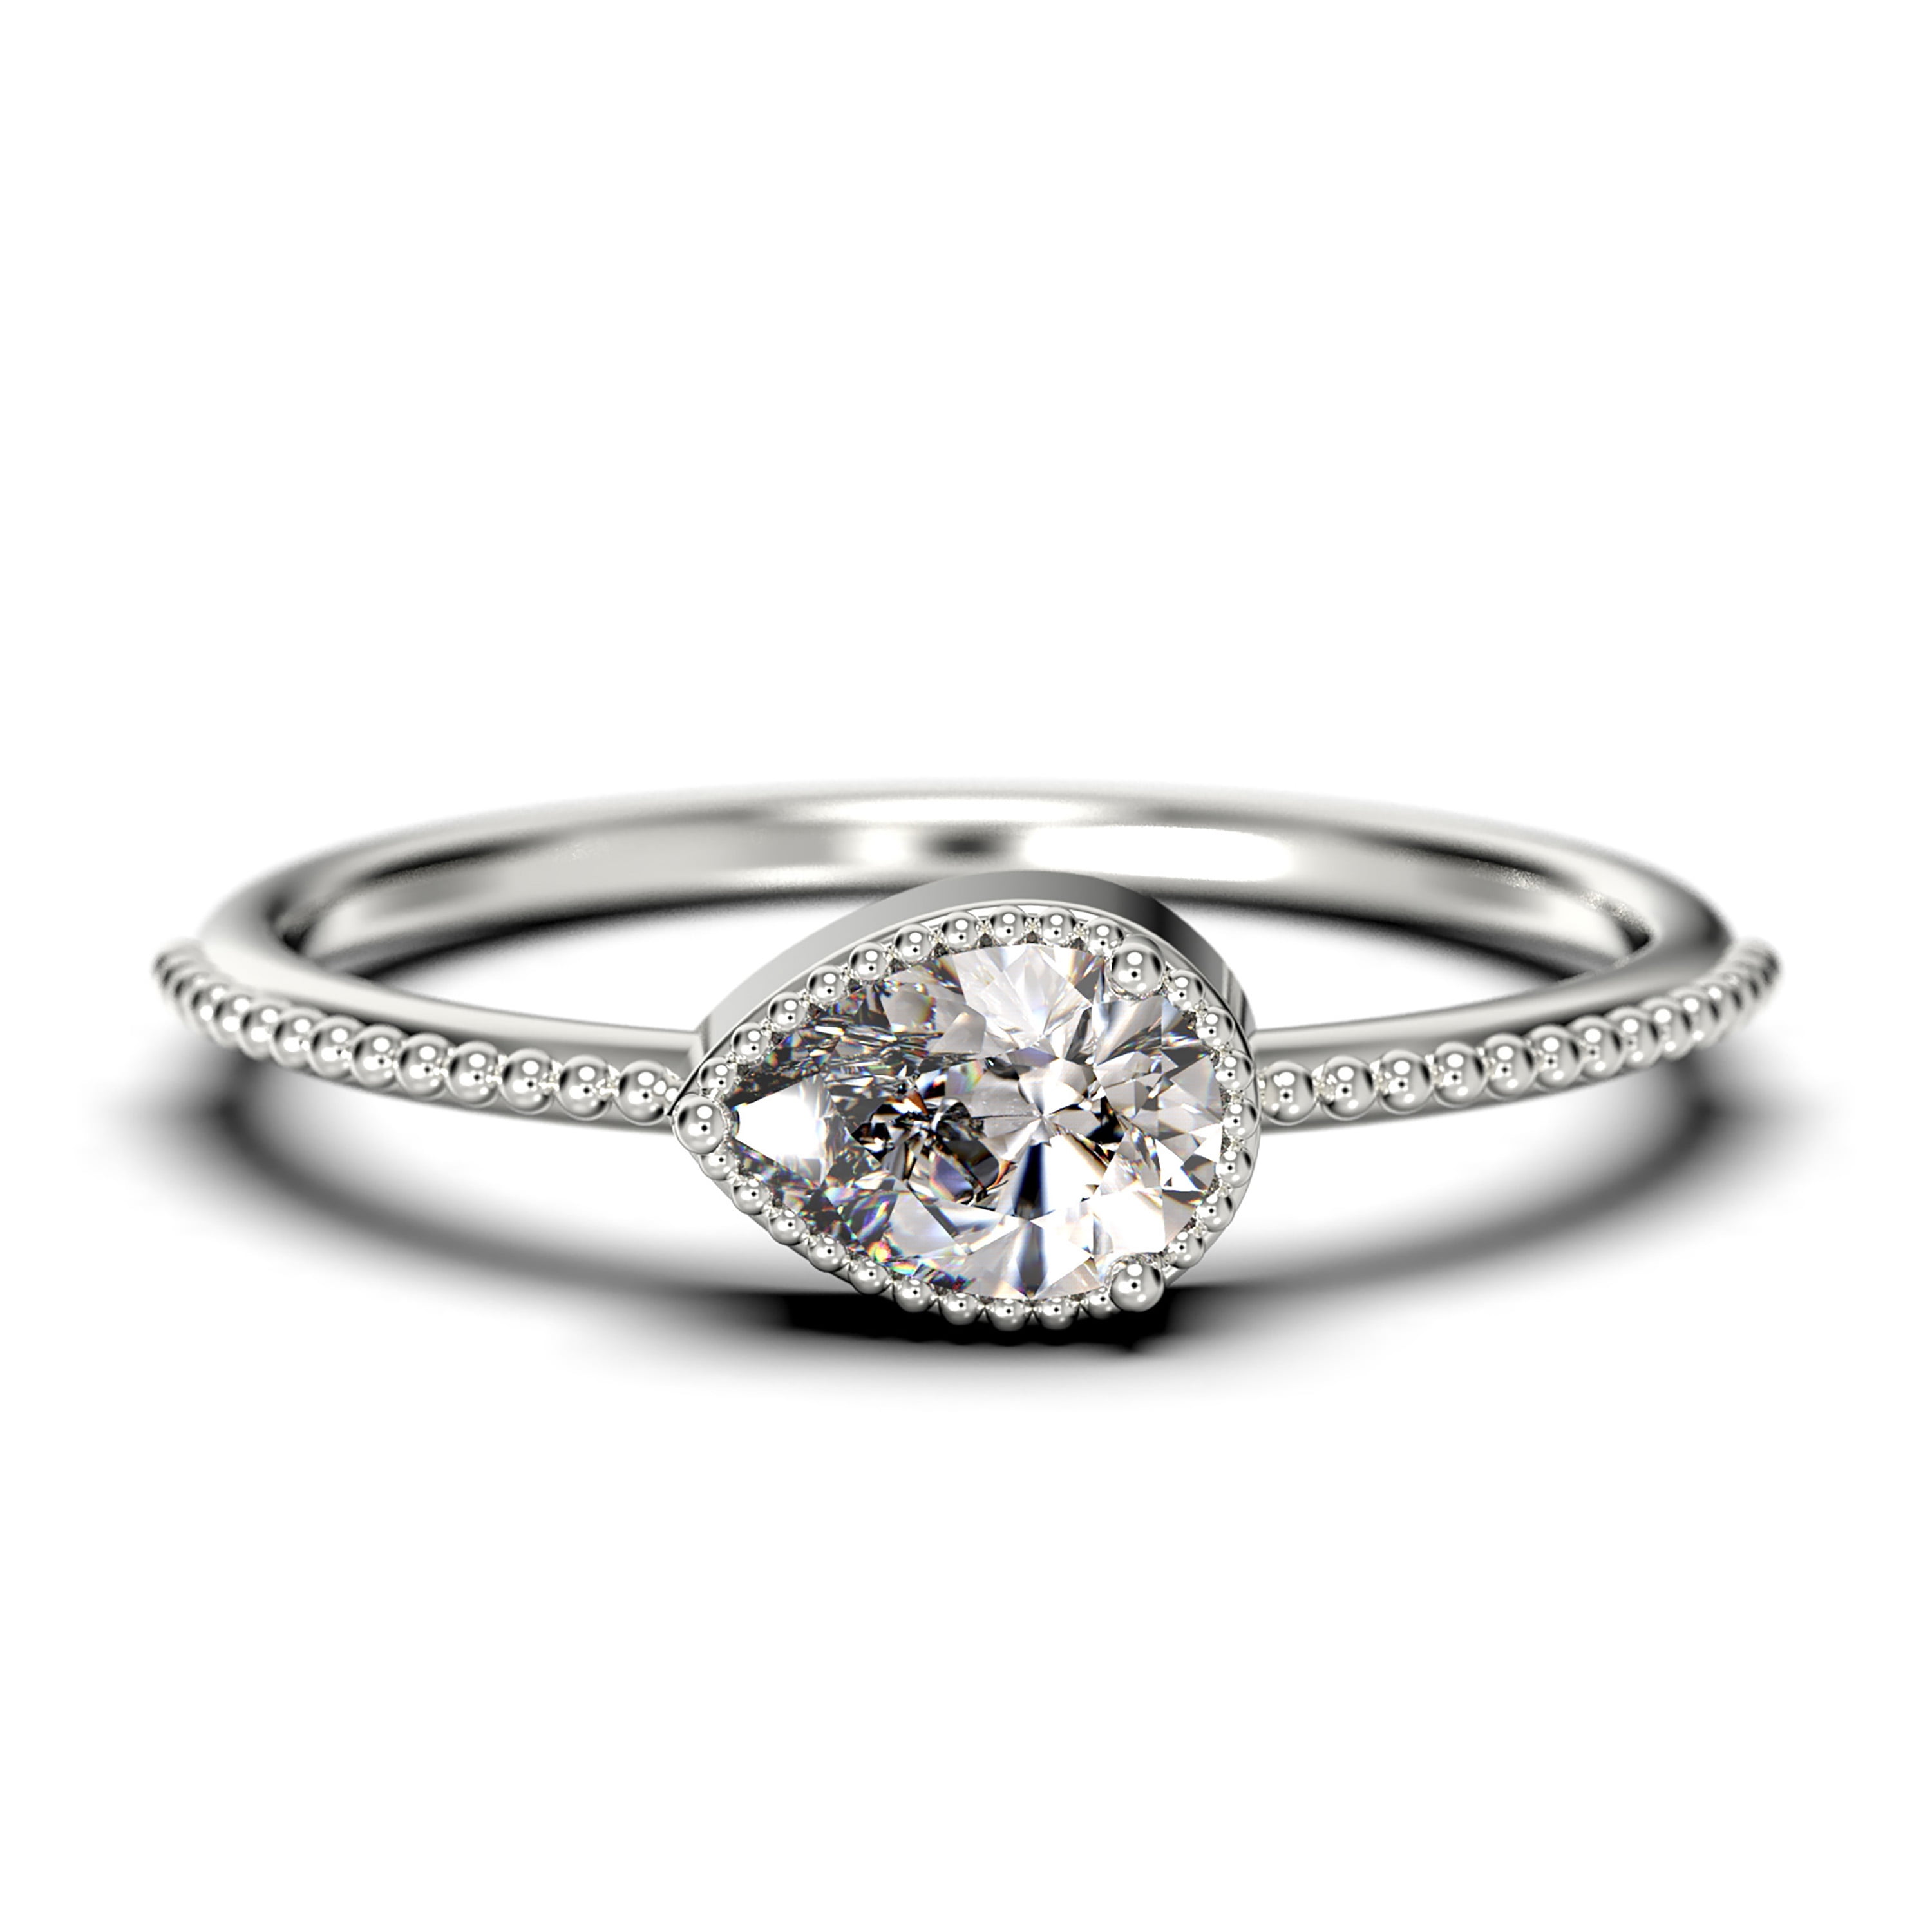 Near White Princess Cut Moissanite Engagement Wedding Ring 925 Silver 1.10 CT 